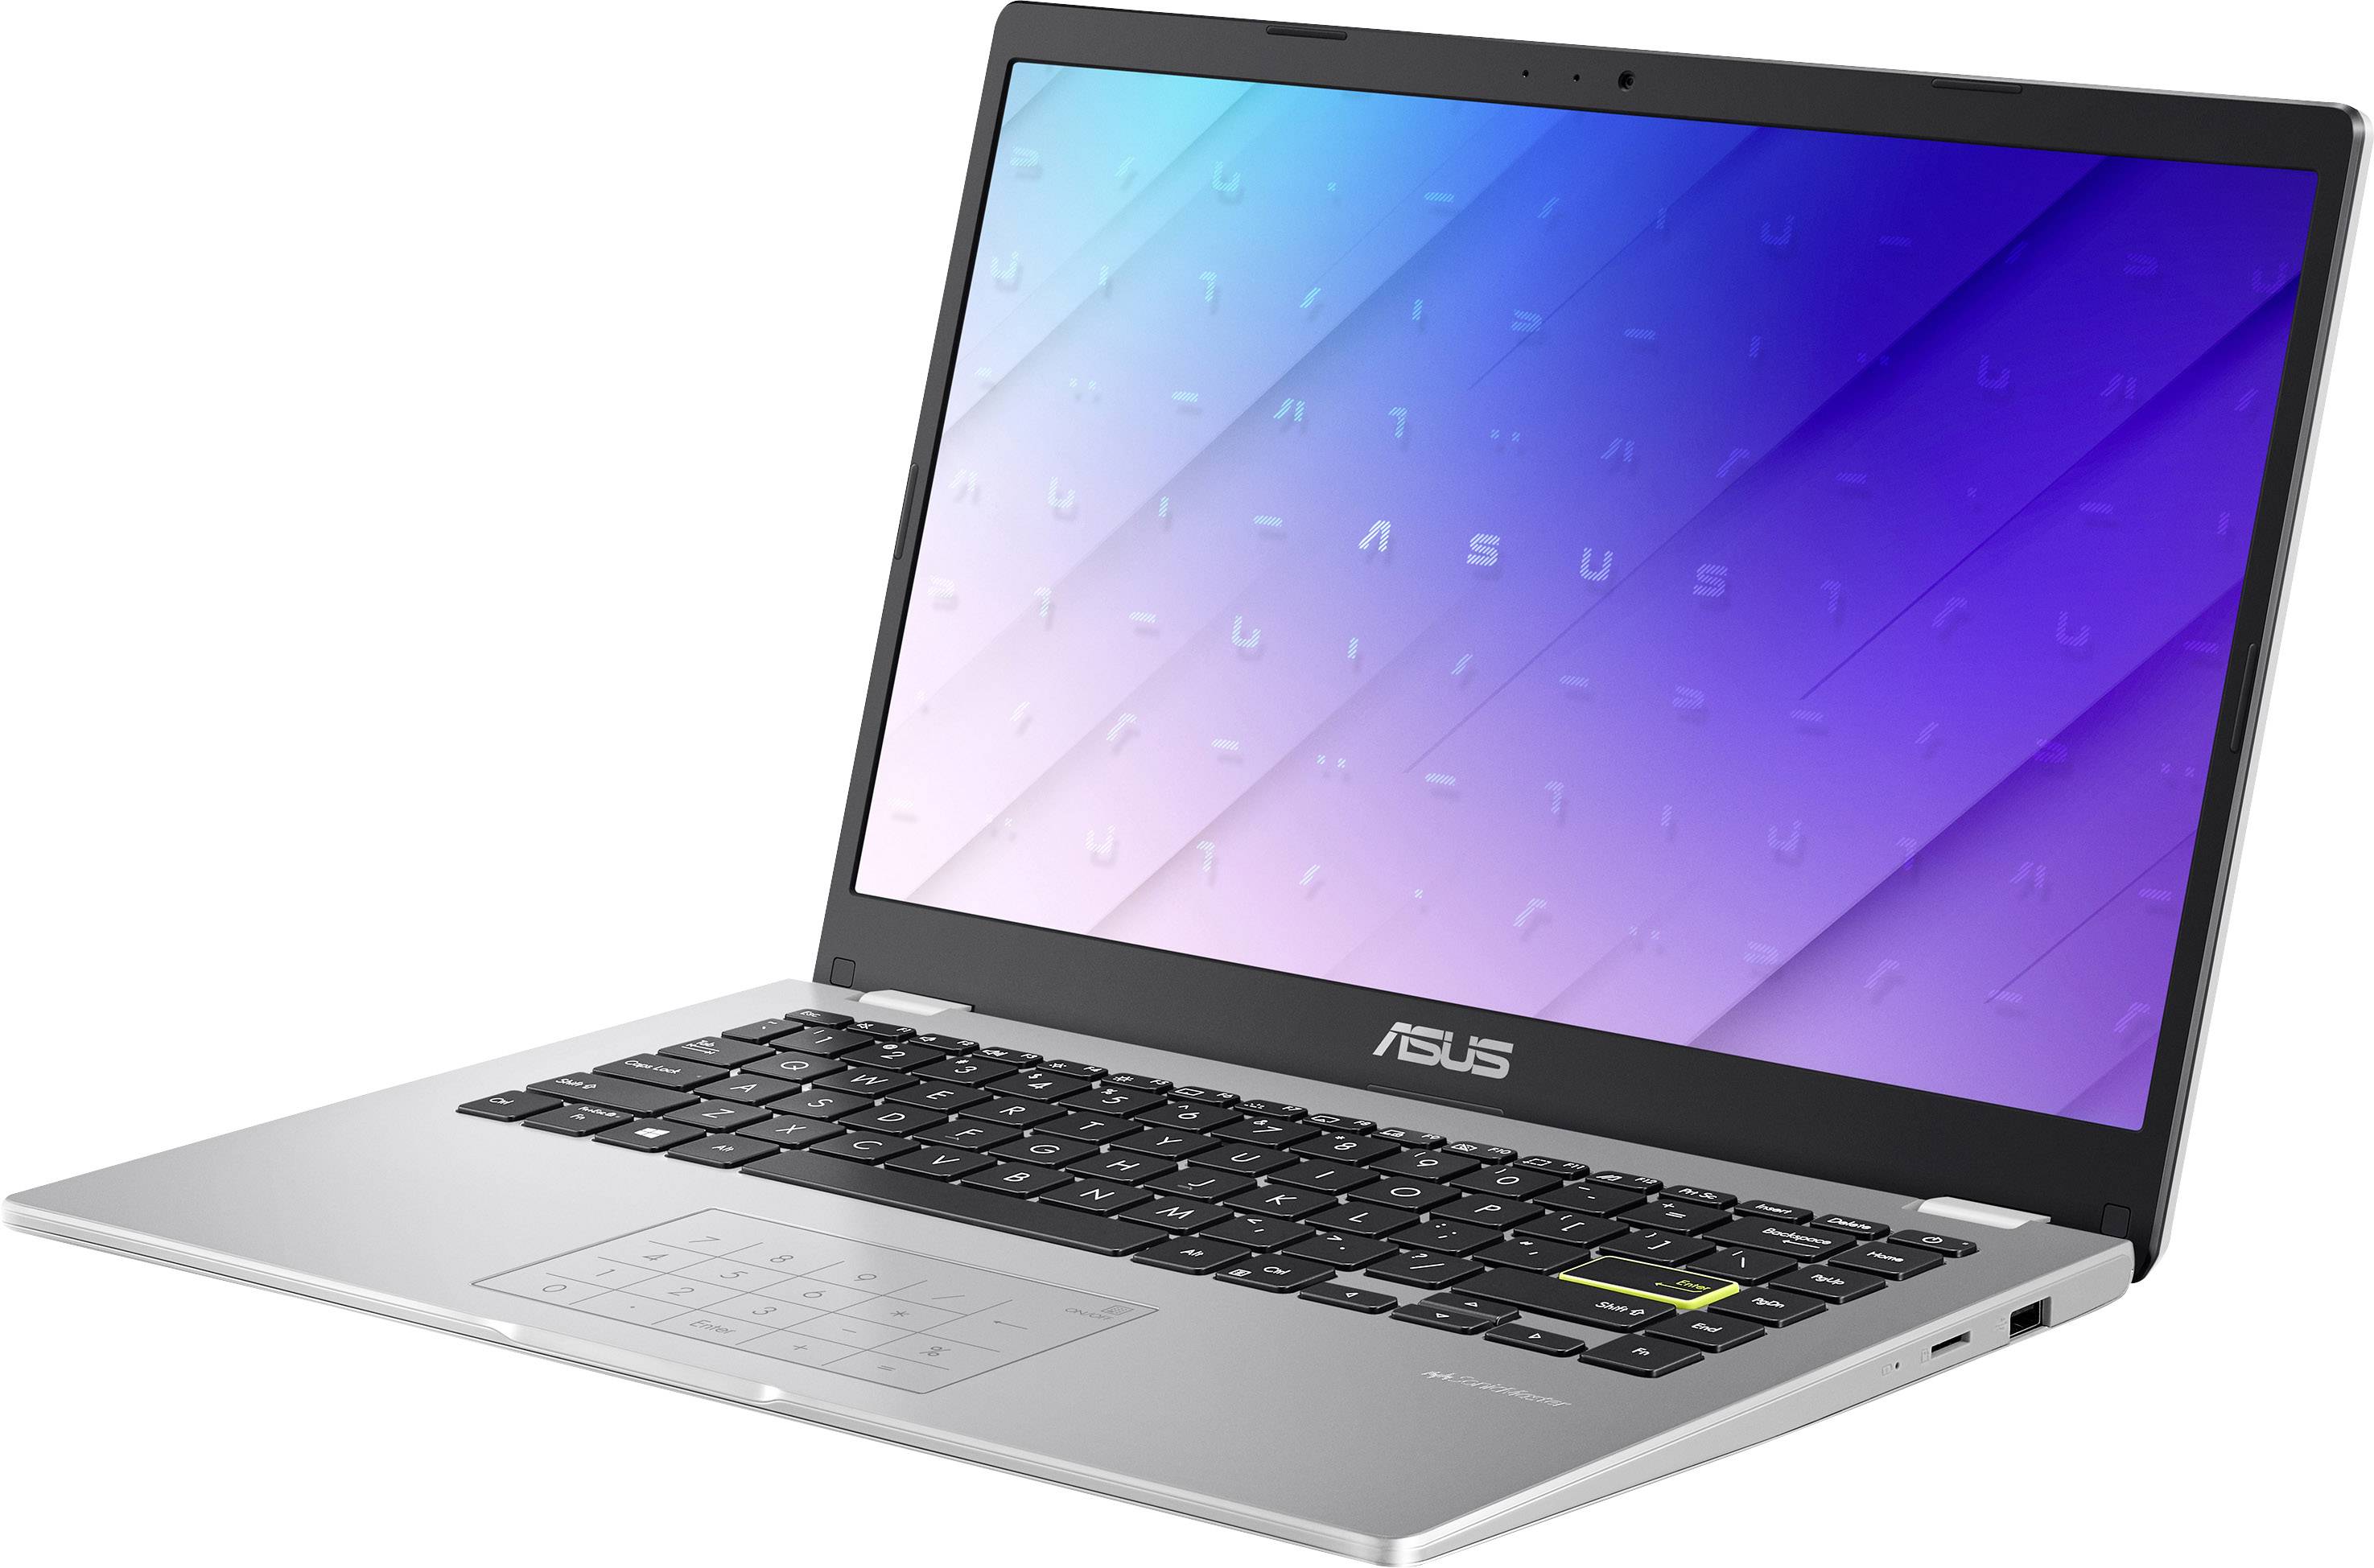 Asus Vivobook 14 E410ma 356 Cm 14 Inch Full Hd Laptop Intel® Pentium® Silver N5030 8 Gb Ram 6950